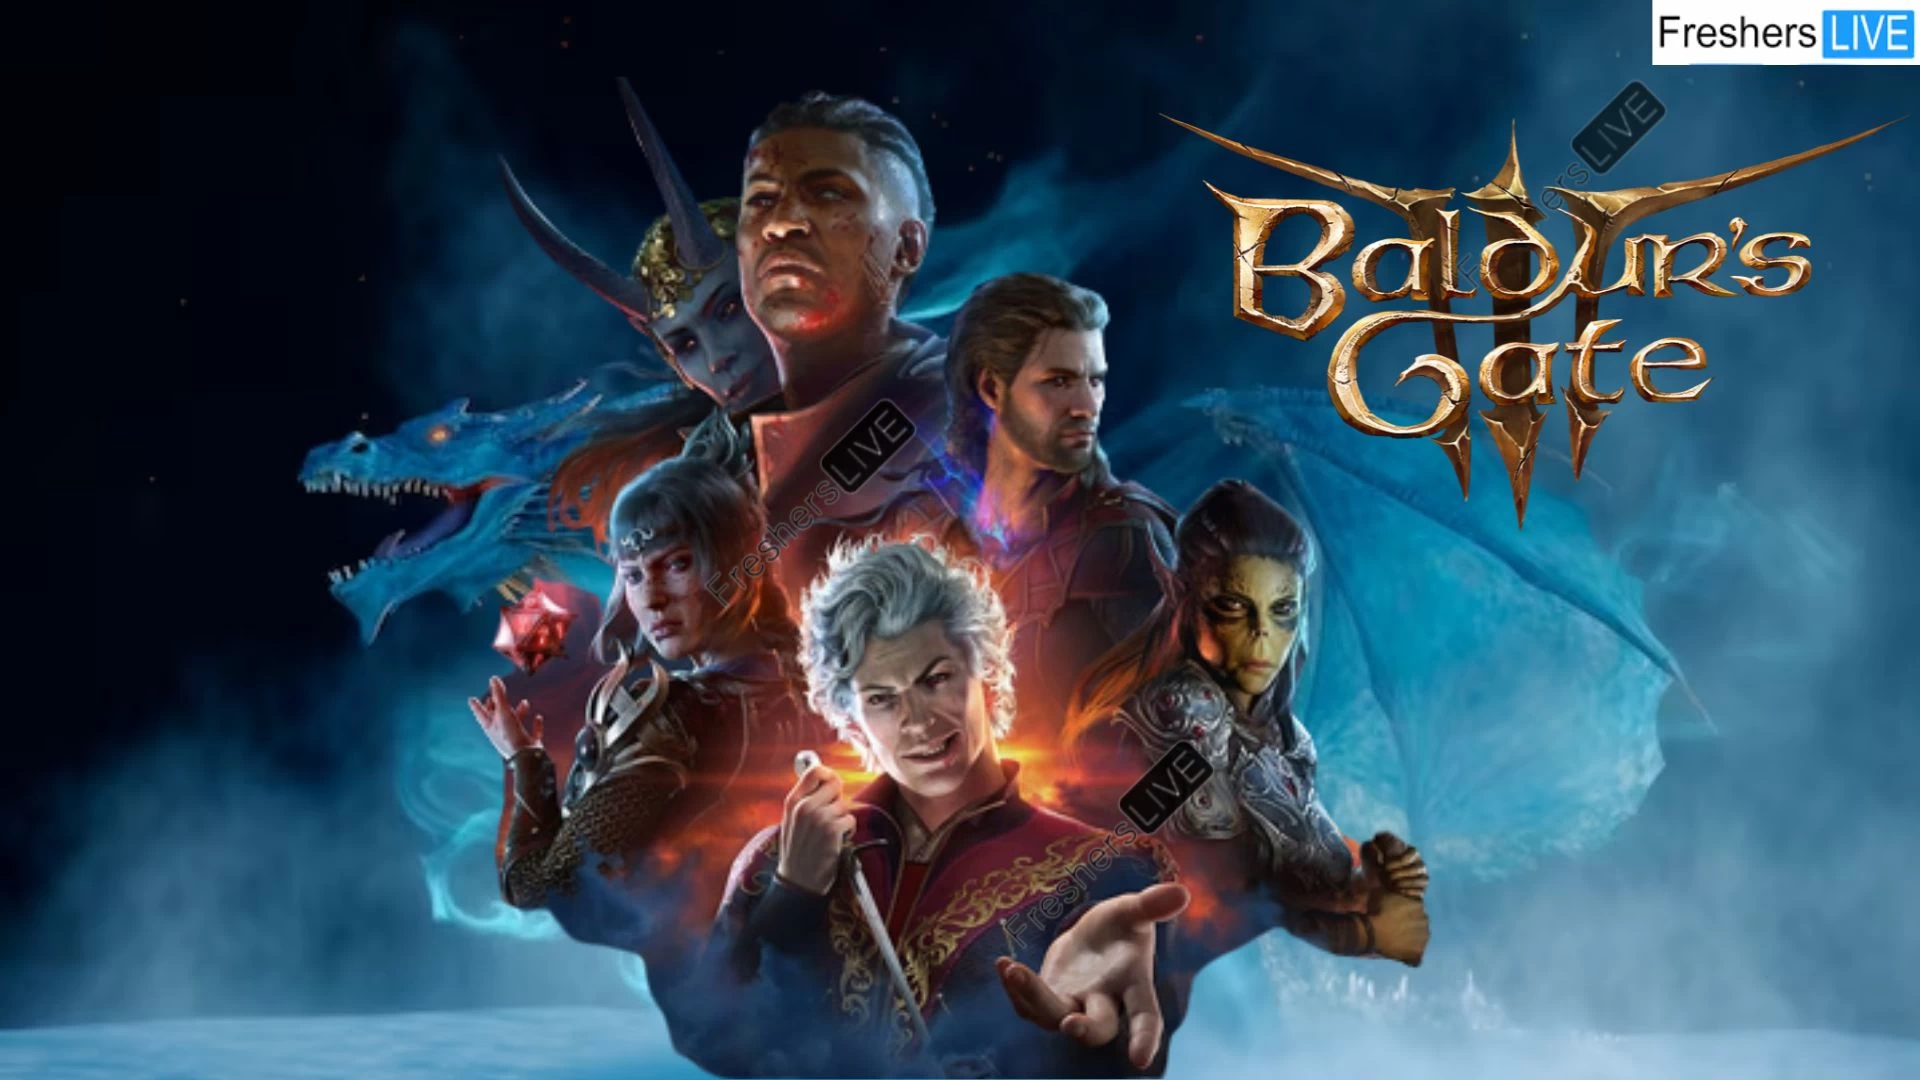 Xbox Seemed to Really Underestimate Baldur's Gate 3, Is Baldur's Gate 3 on Xbox?